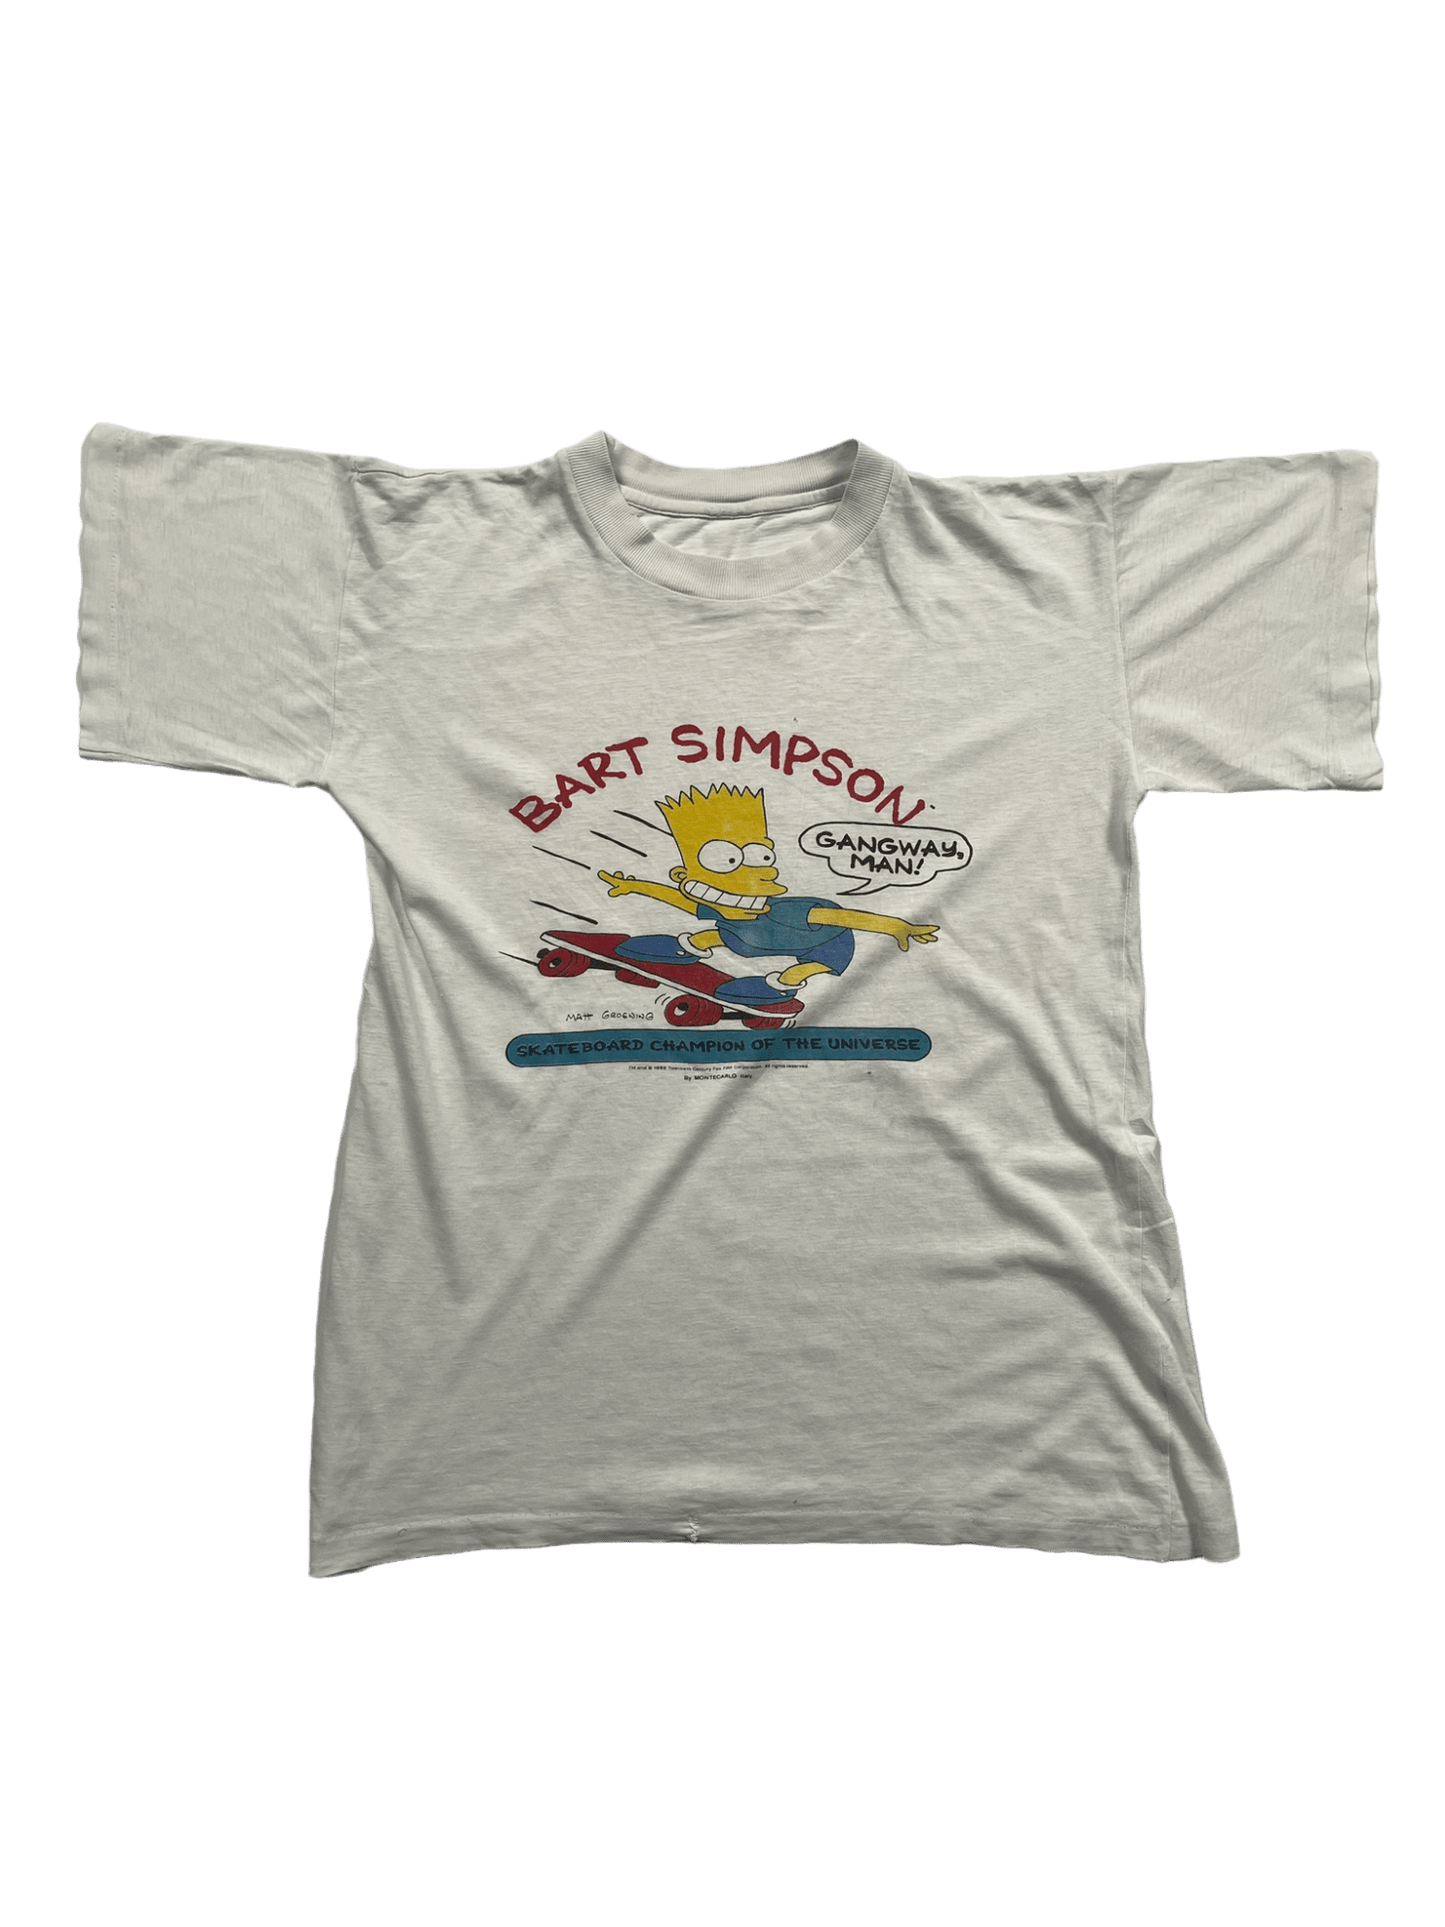 The Vintage Racks Bart Simpson Gangway - S